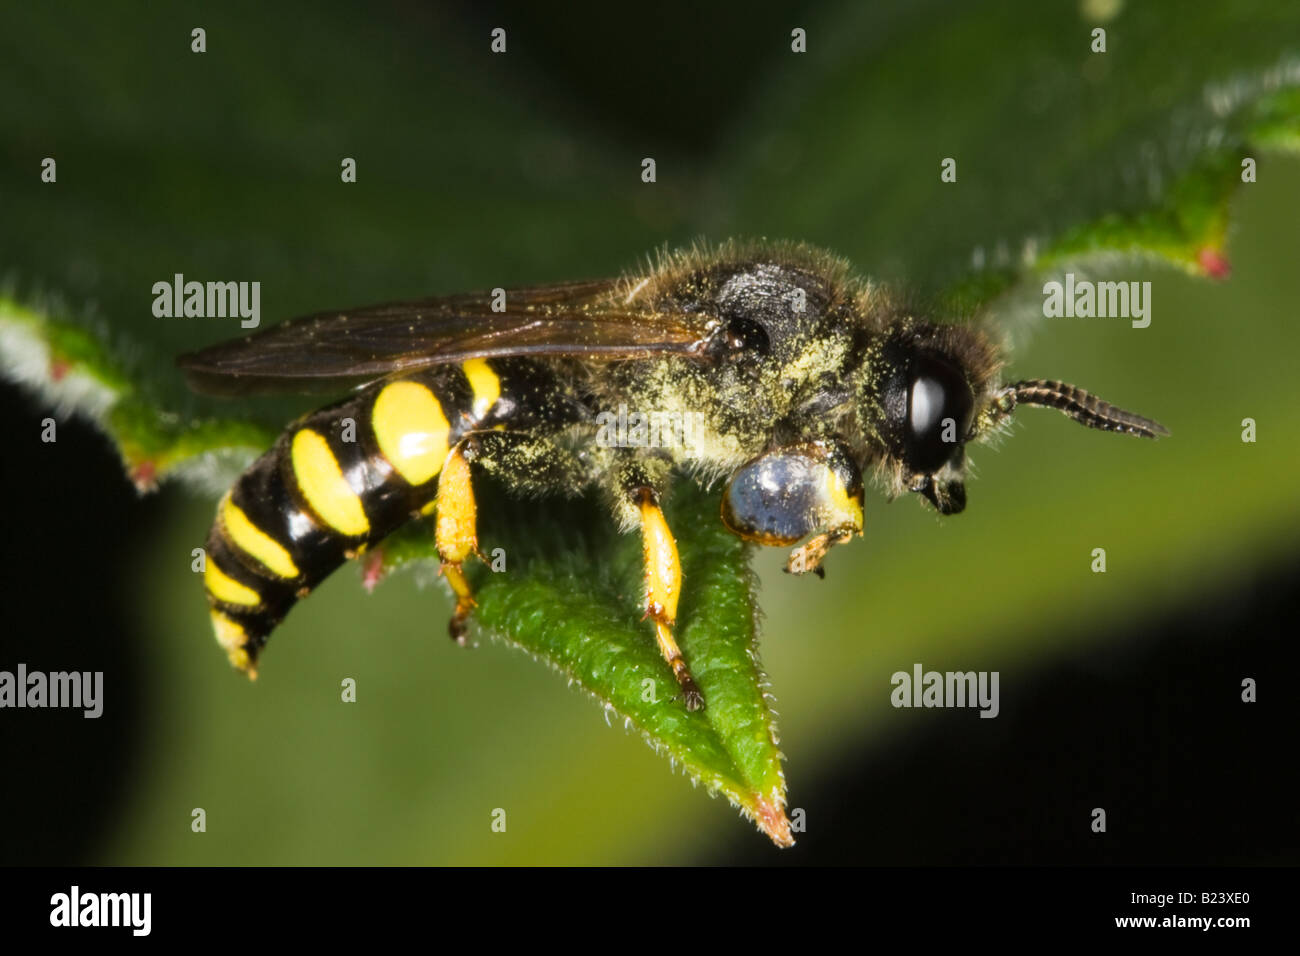 Homme Digger Wasp, au corps allongé (Crabro cribrarius) Banque D'Images